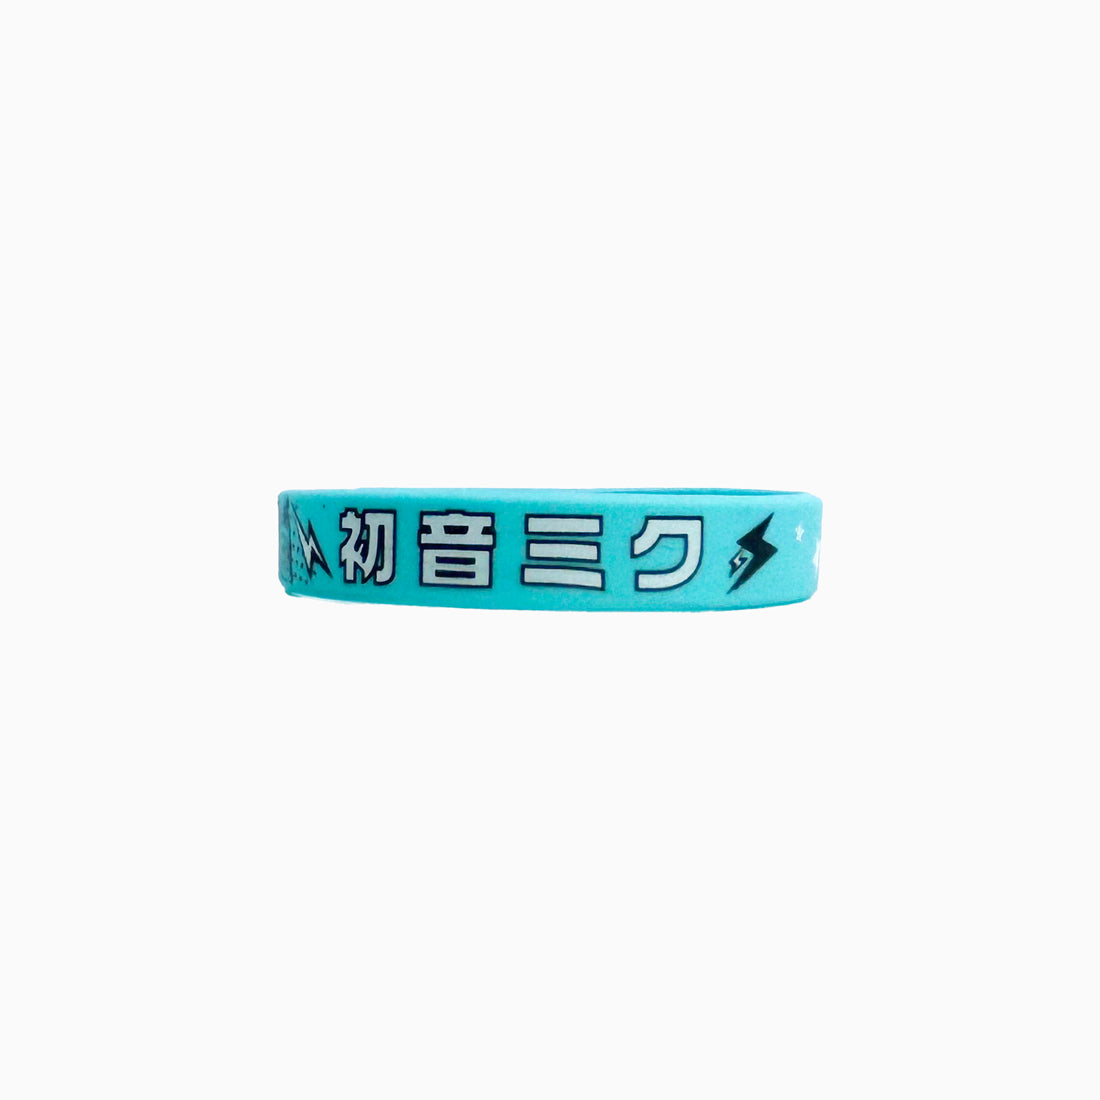 Miku Expo 2024 Hatsune Miku Wristband